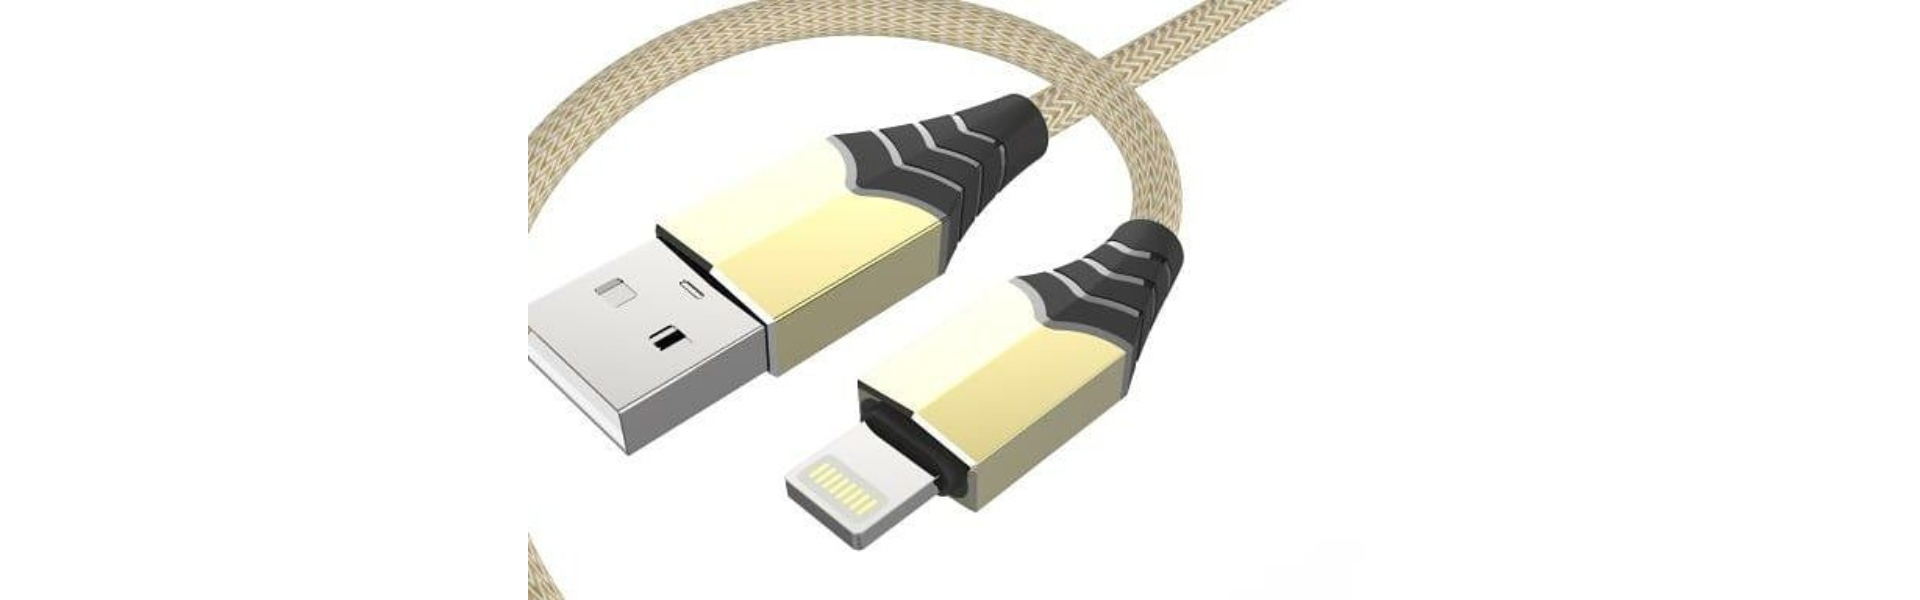 USB kabla, USB kabla danych,kabla danych,Dong Guan Rong Pin Electronic Technology Co.Ltd